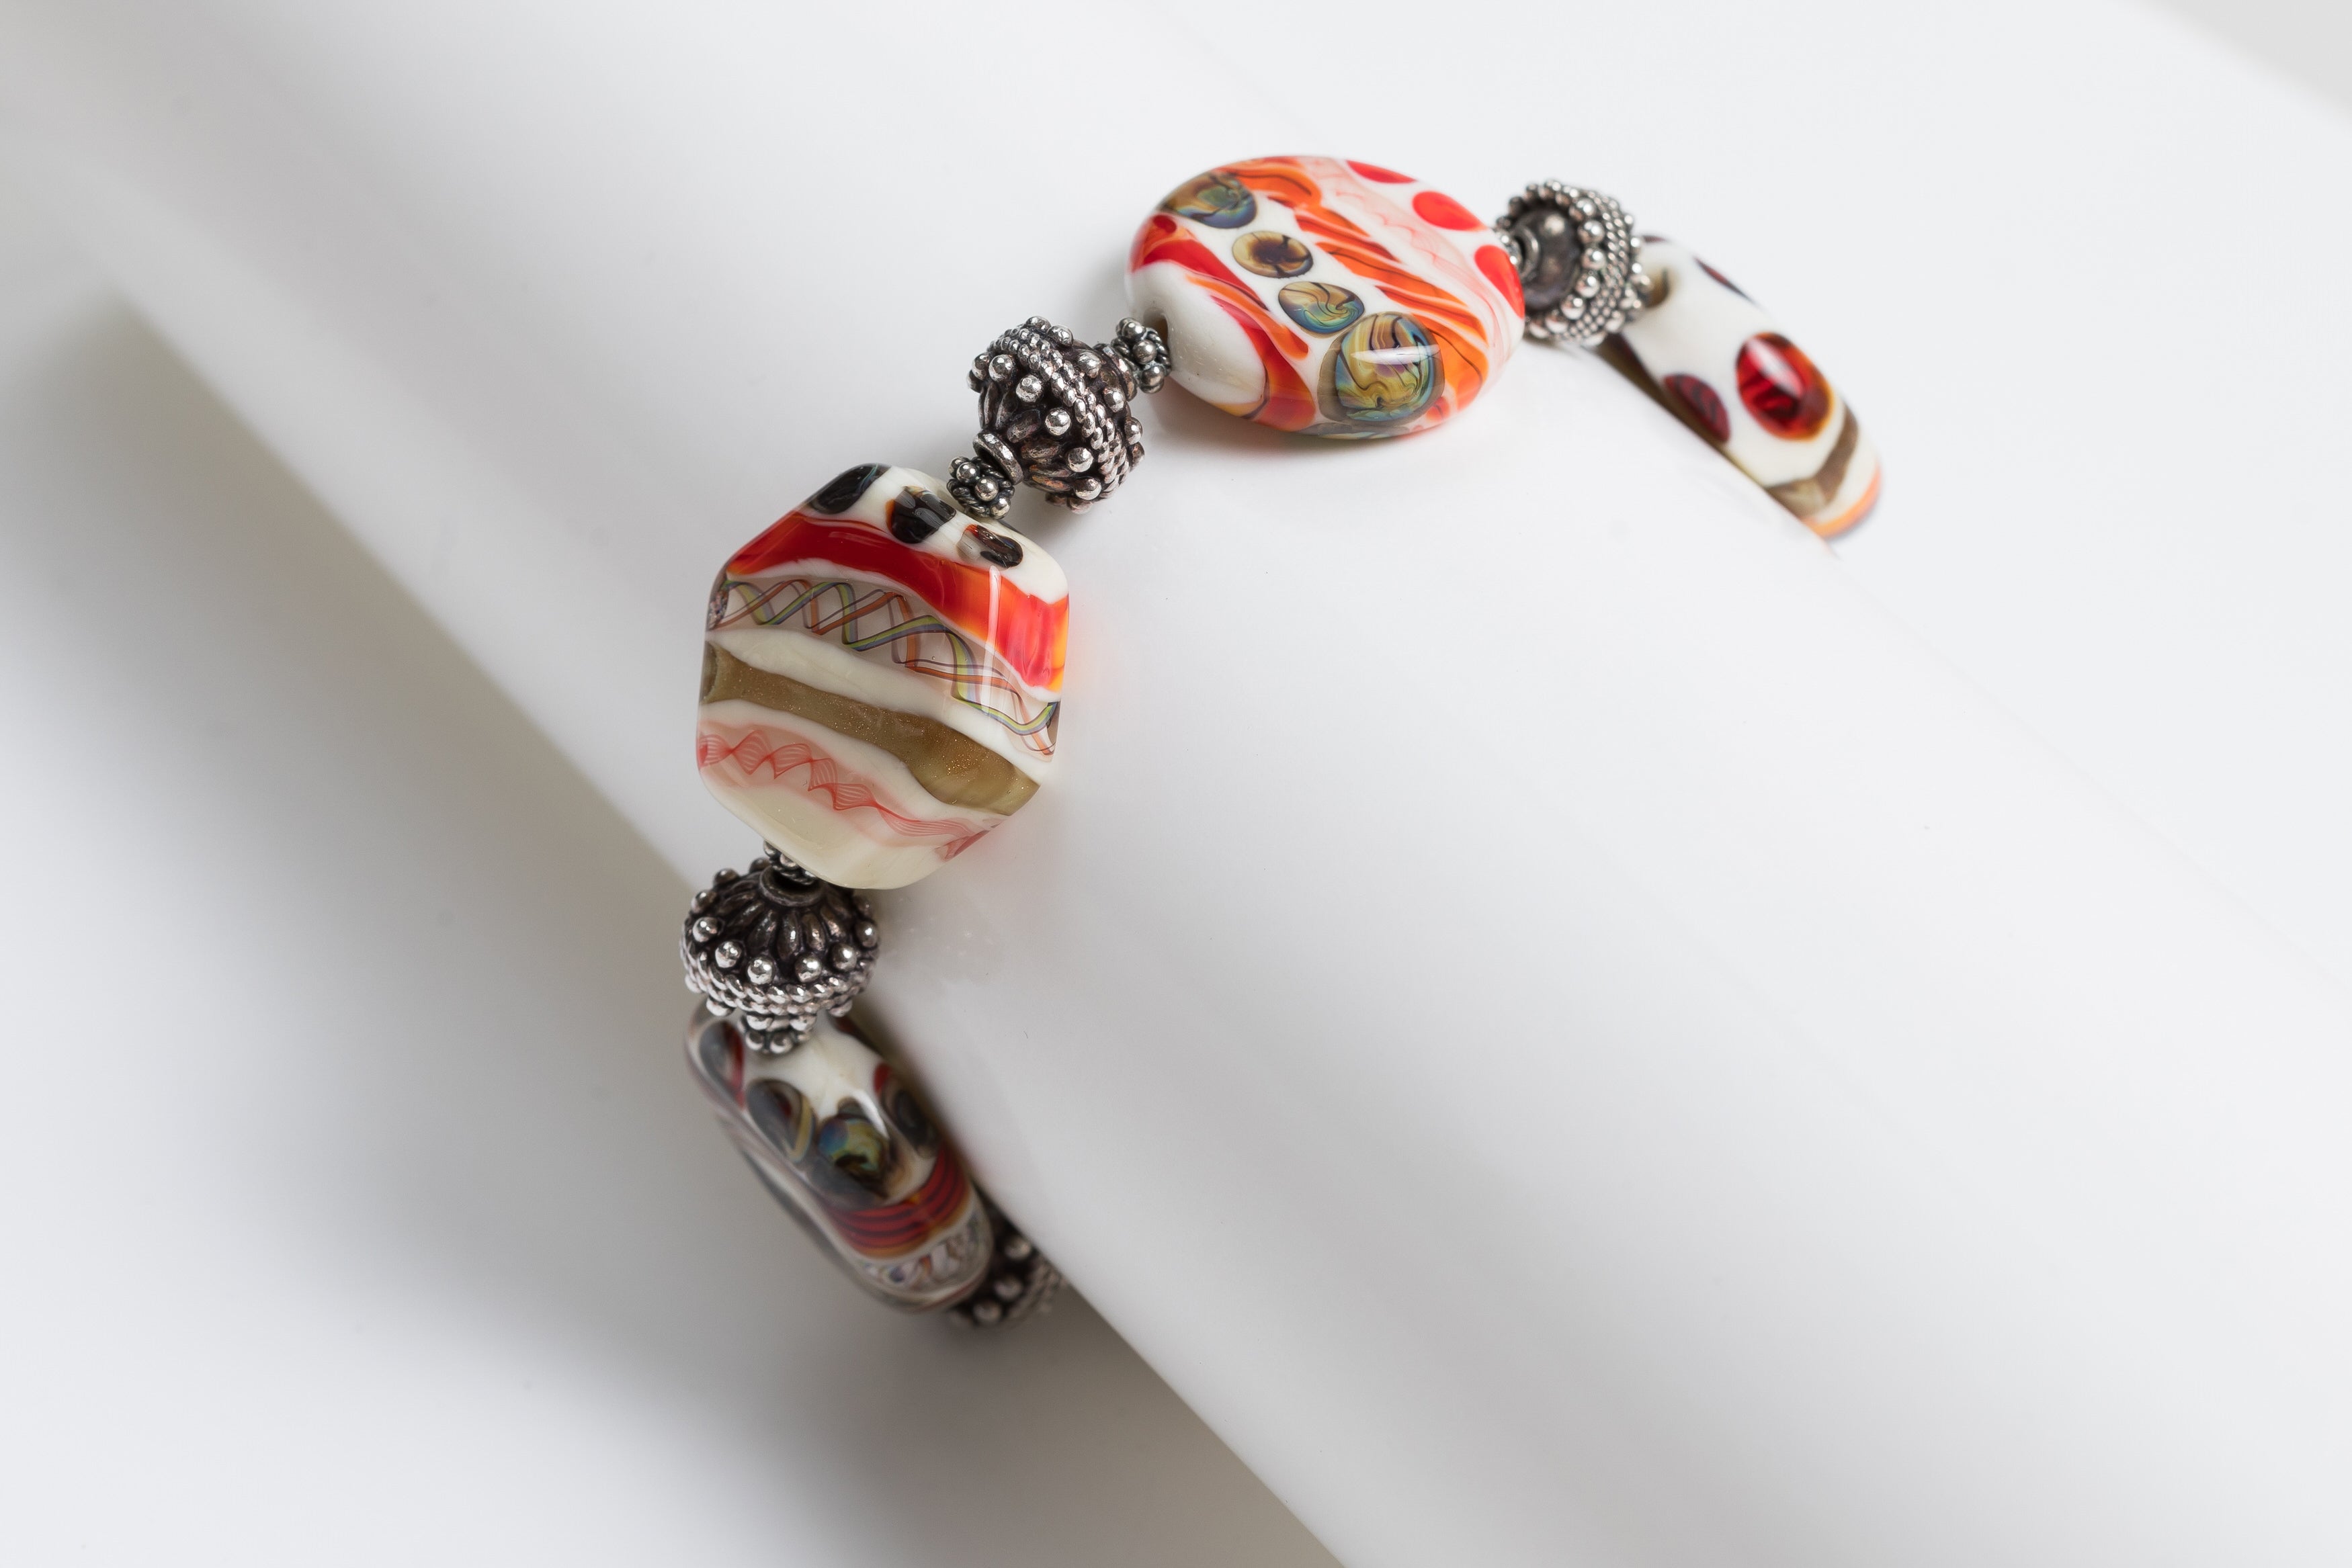 Silver Beads & Colorful Glass Bracelet